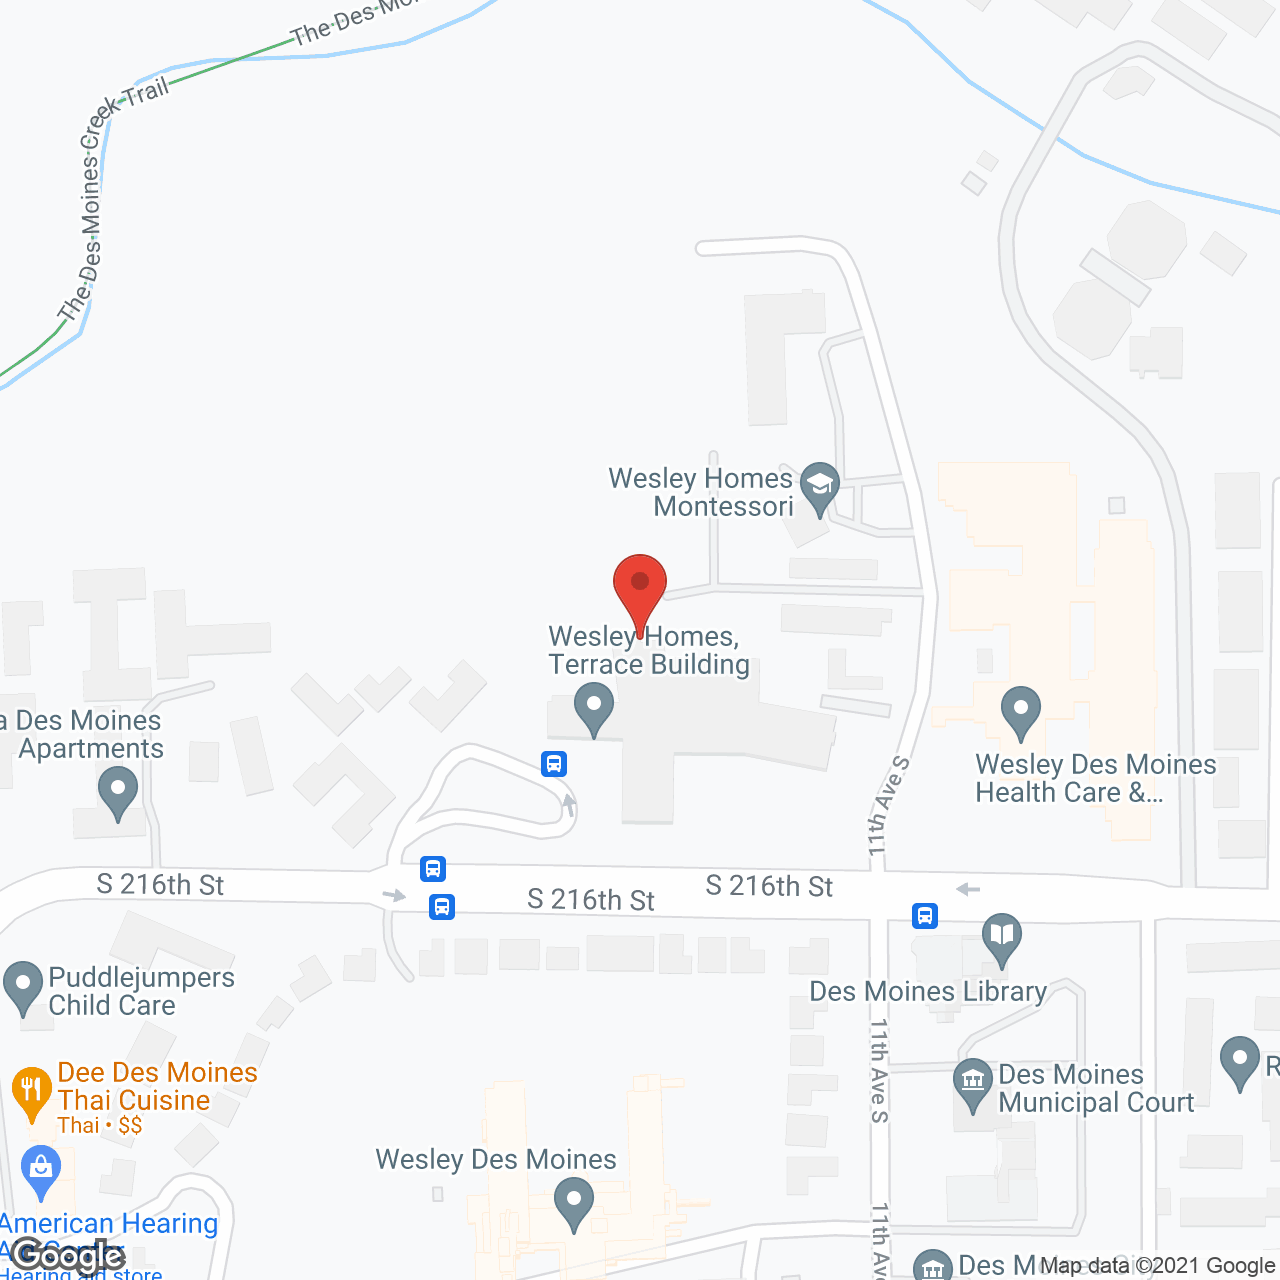 Wesley Homes Des Moines in google map